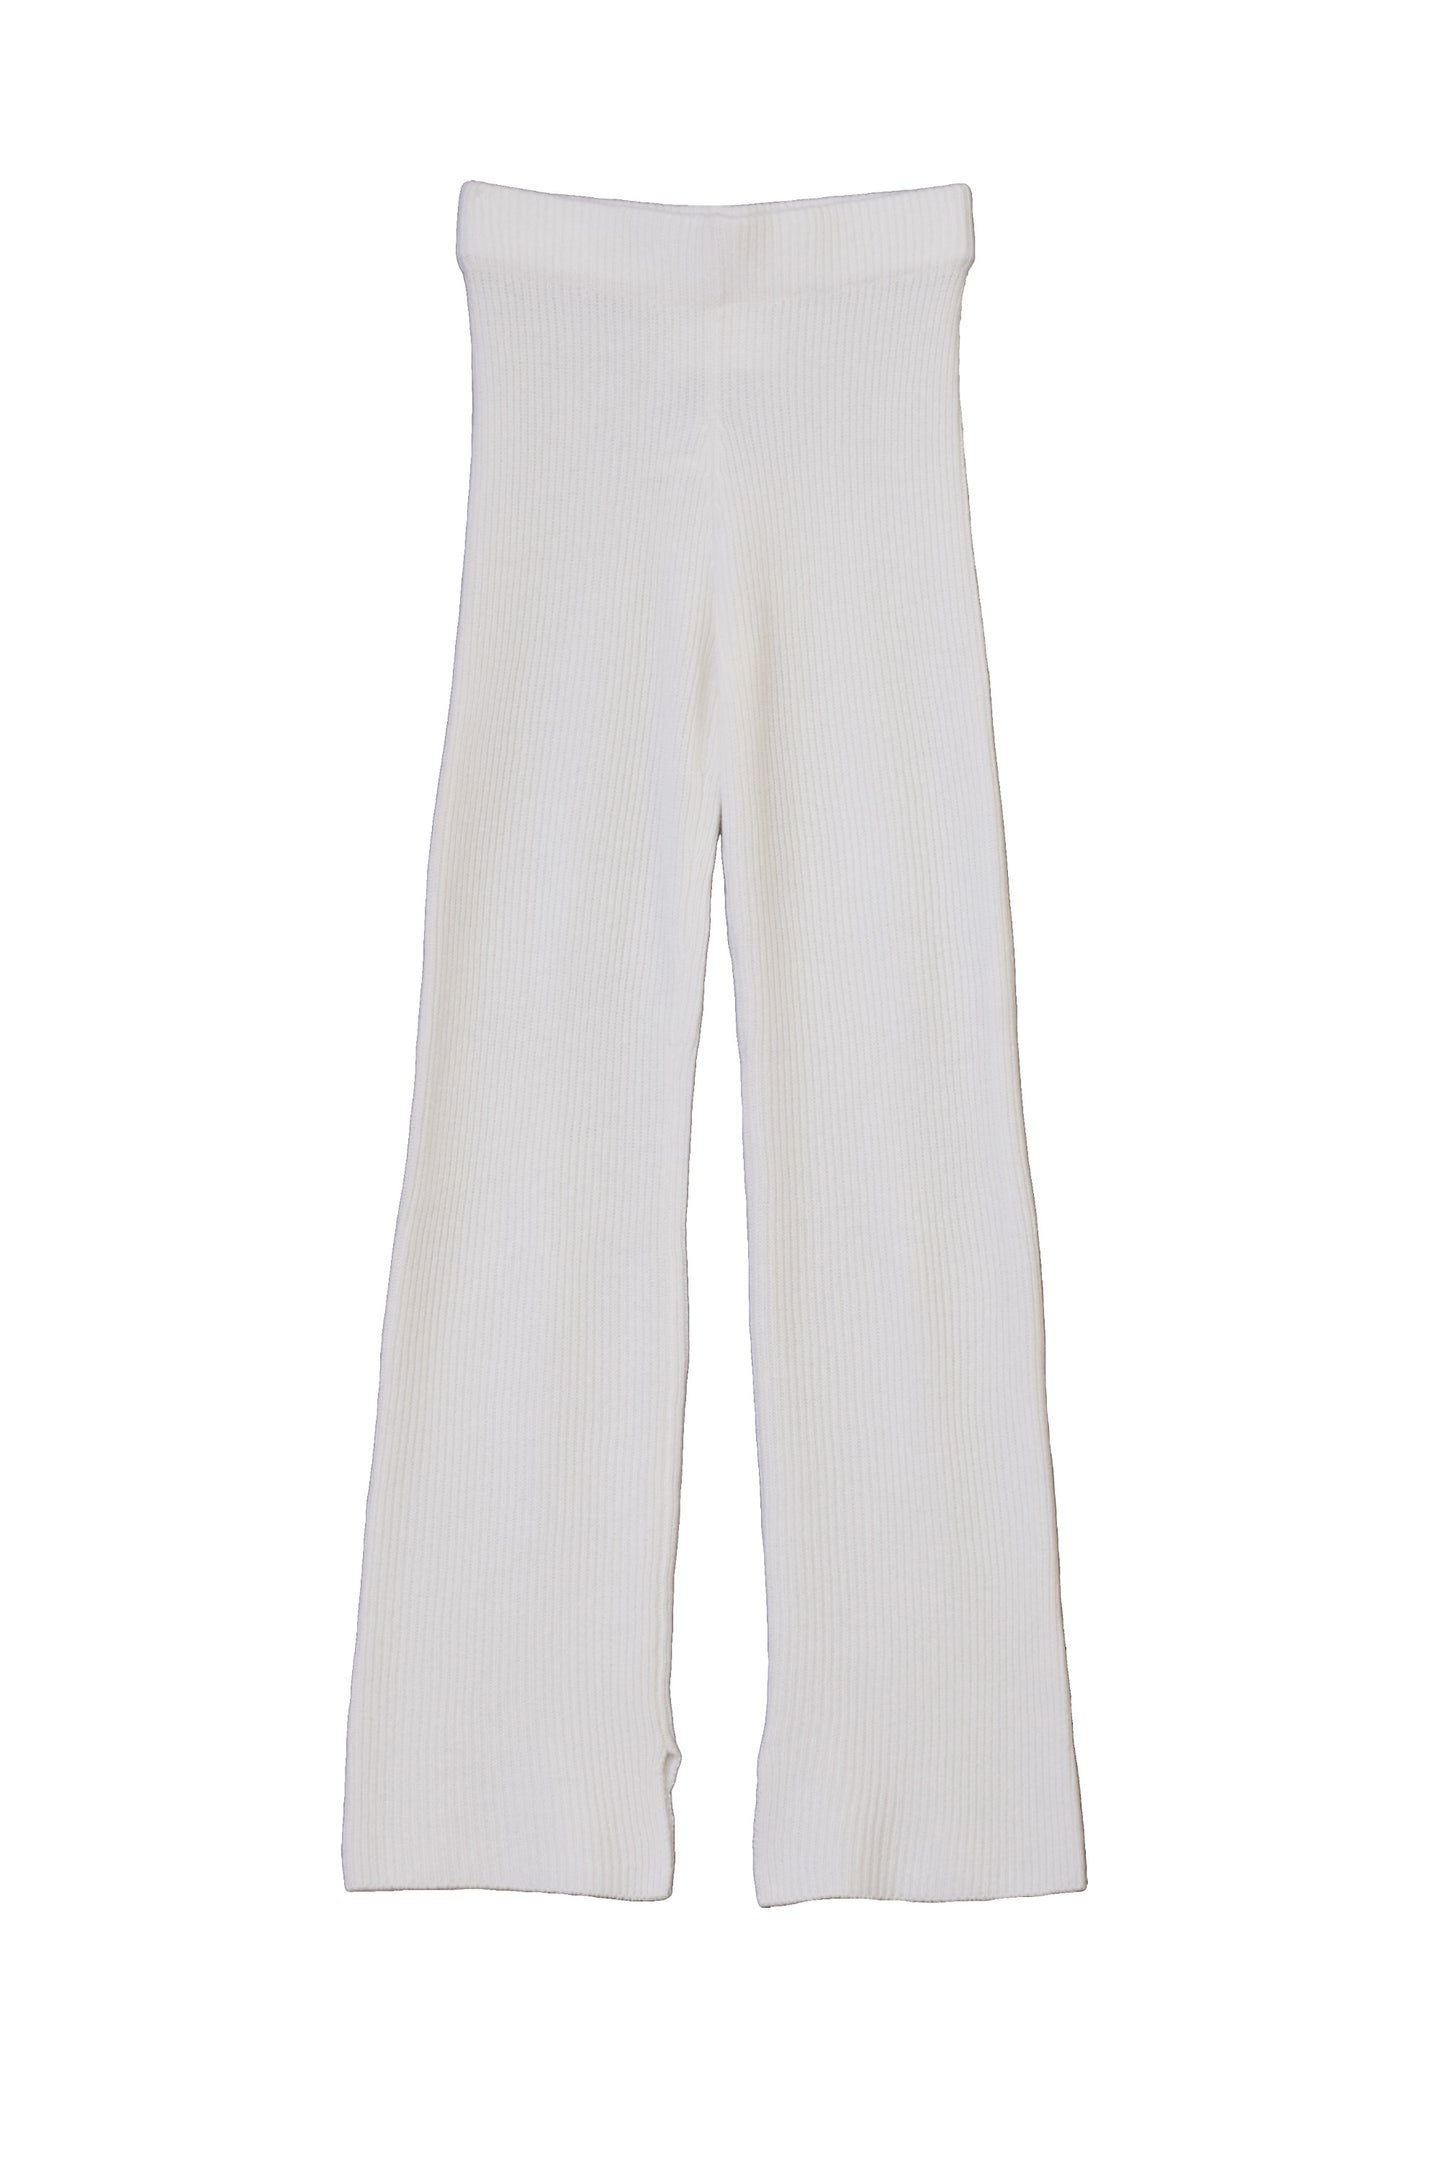 Cashmere Rib knit Pants | Shell White